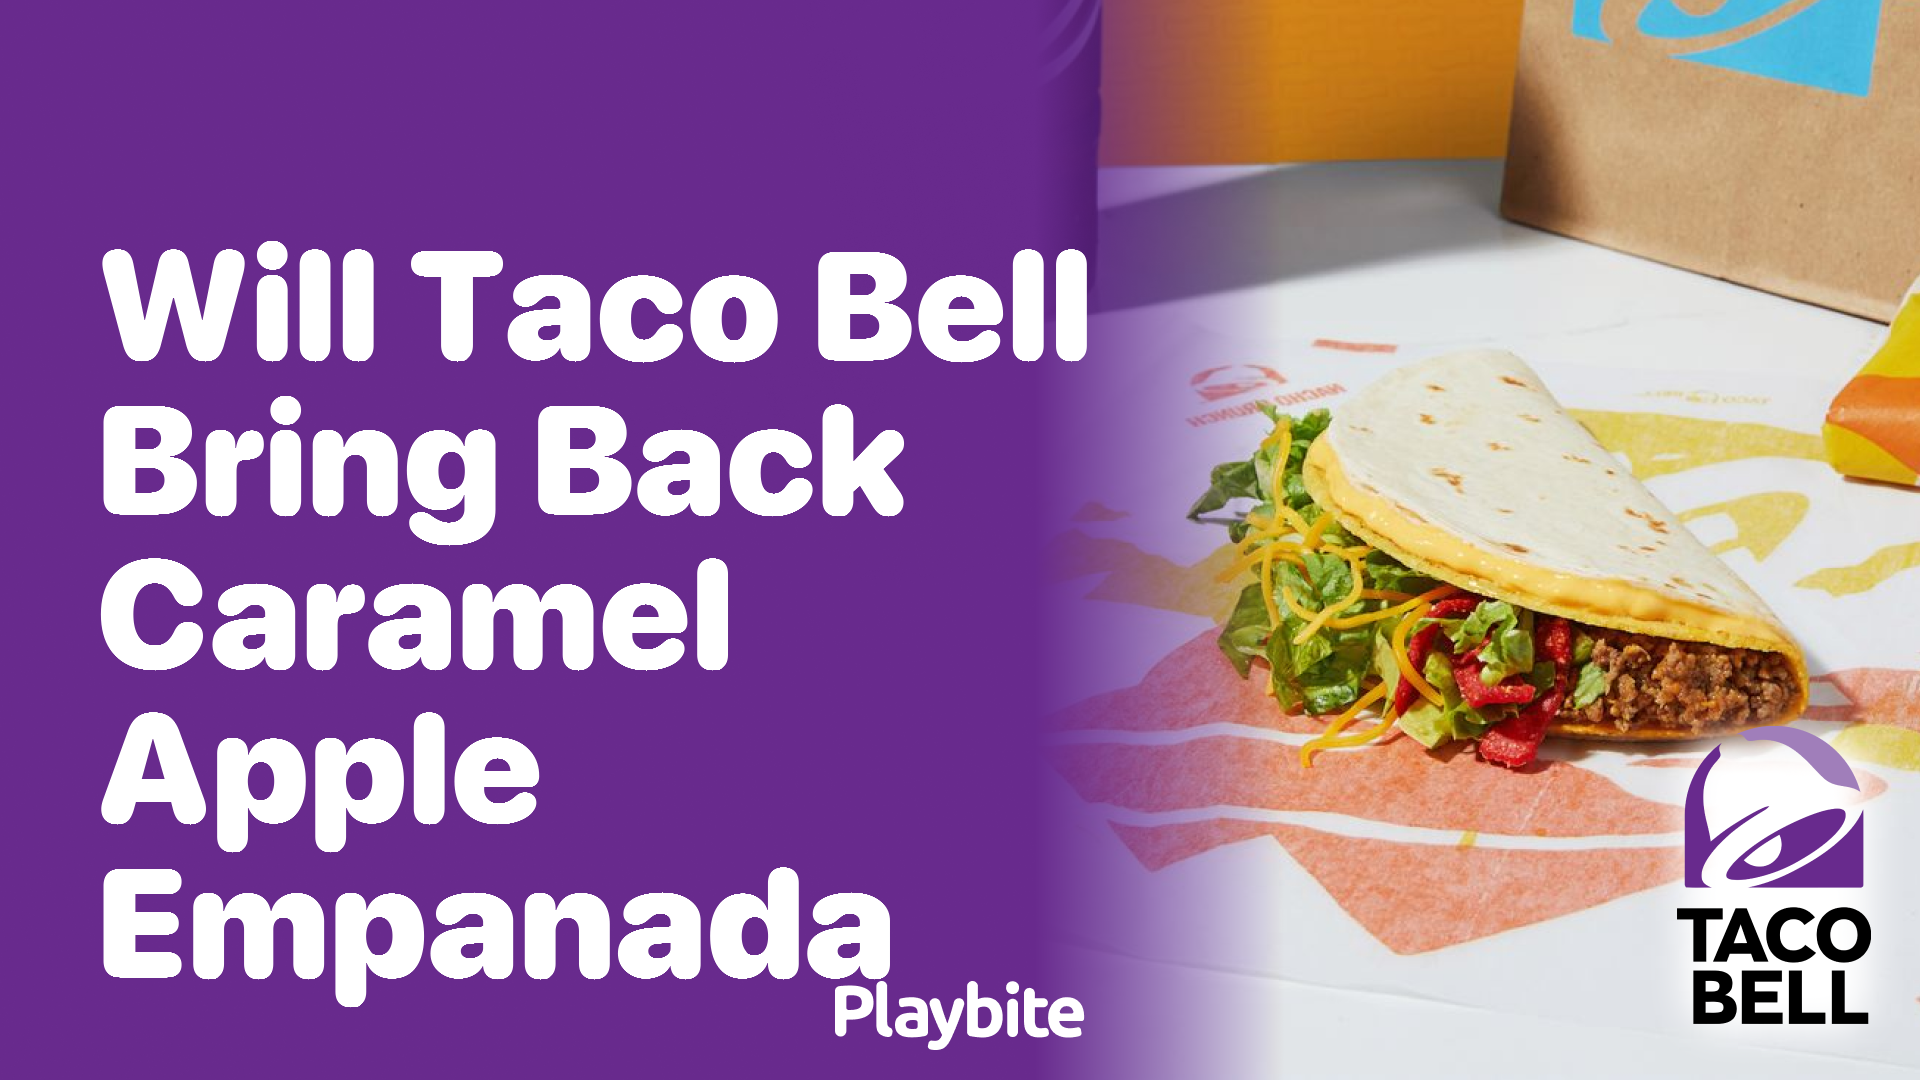 Will Taco Bell Bring Back the Caramel Apple Empanada?